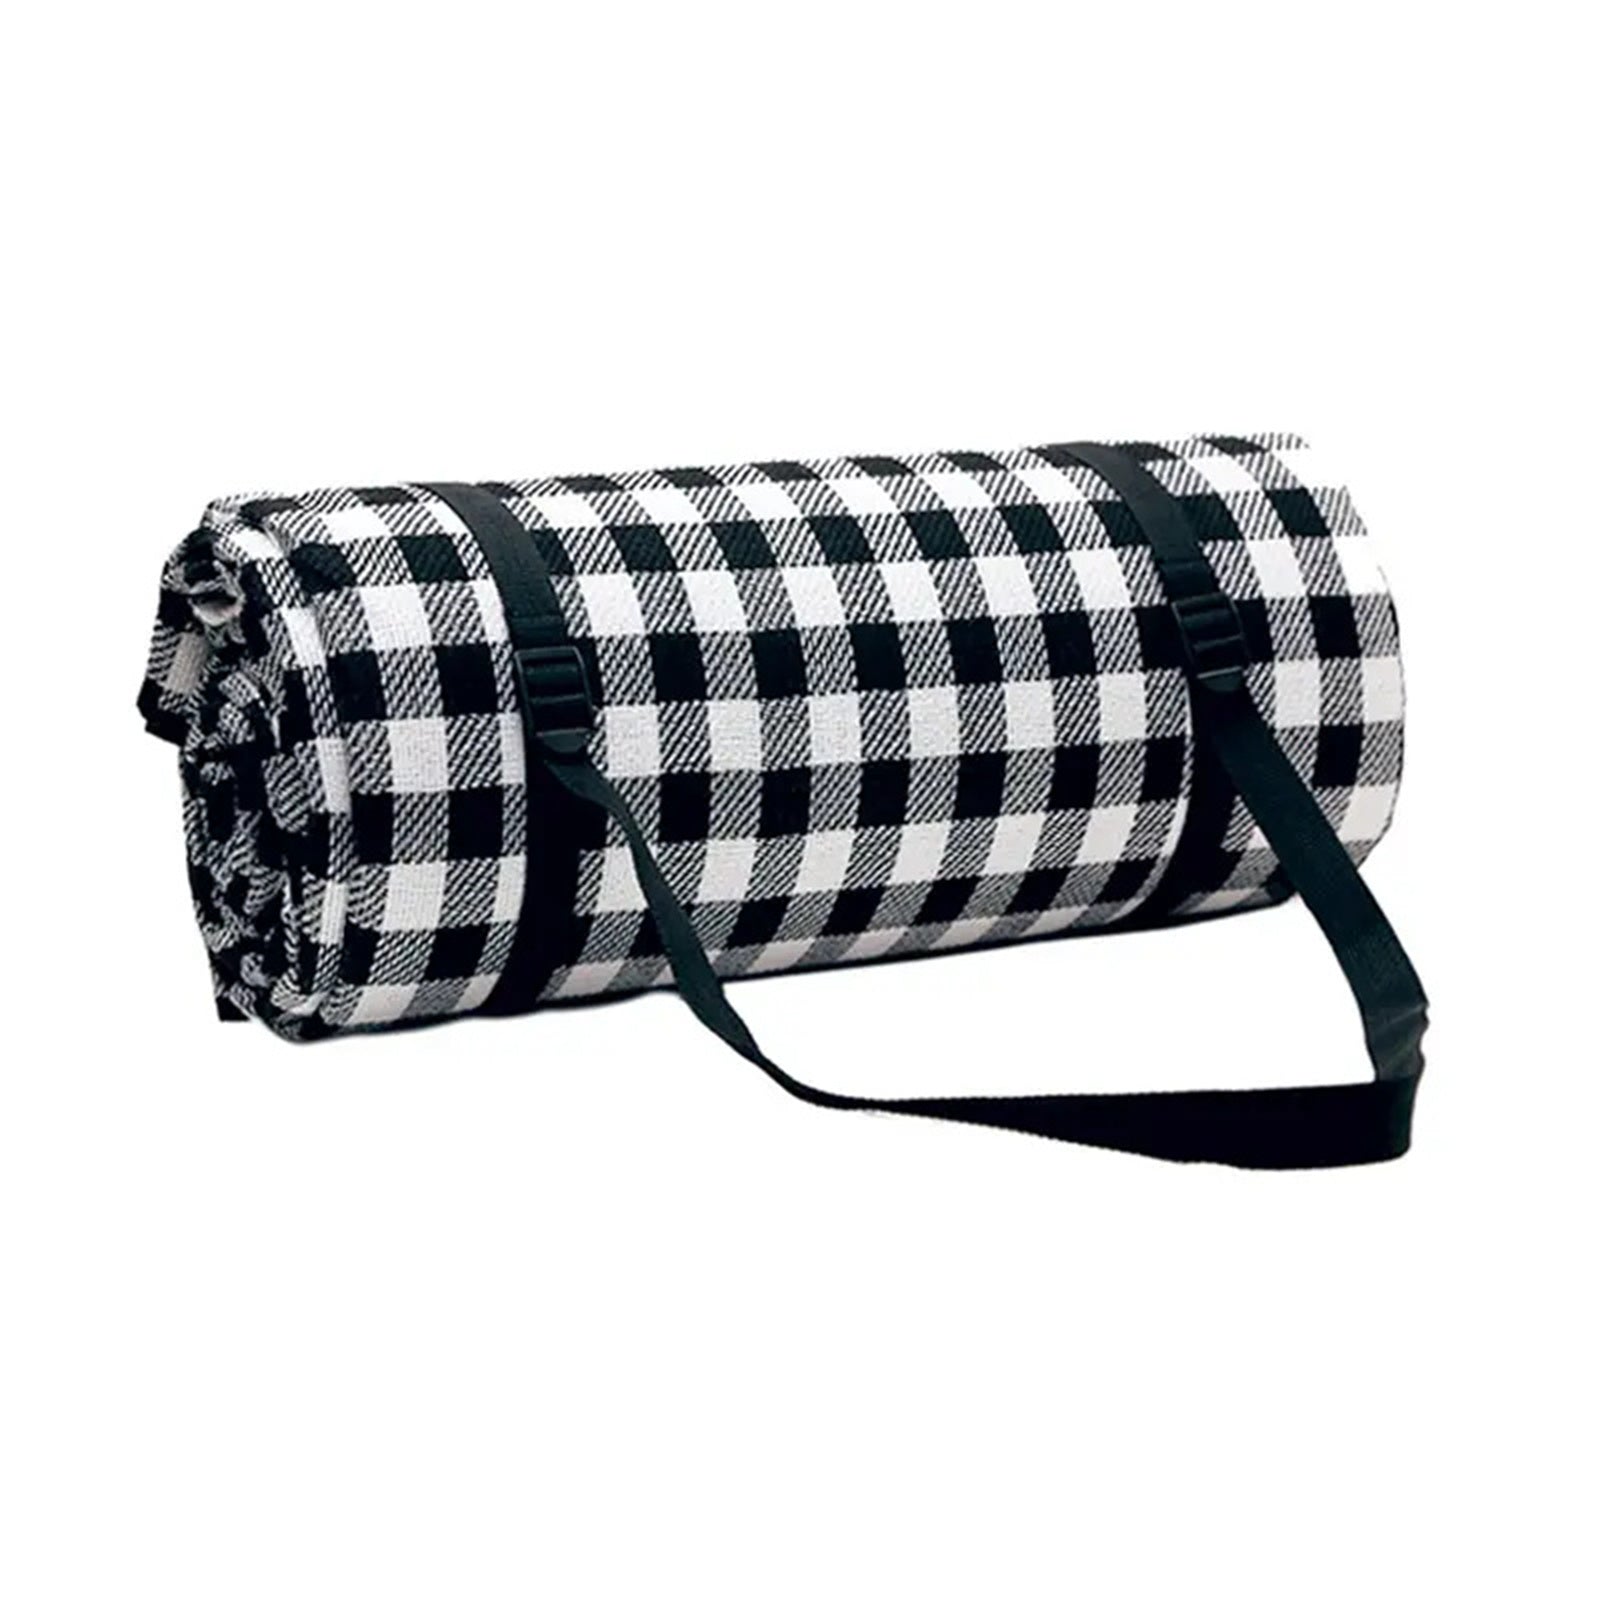 Mountgear Outdoor Camping Picnic Blanket Damp-proof Mat Thickening Waterproof Mat L